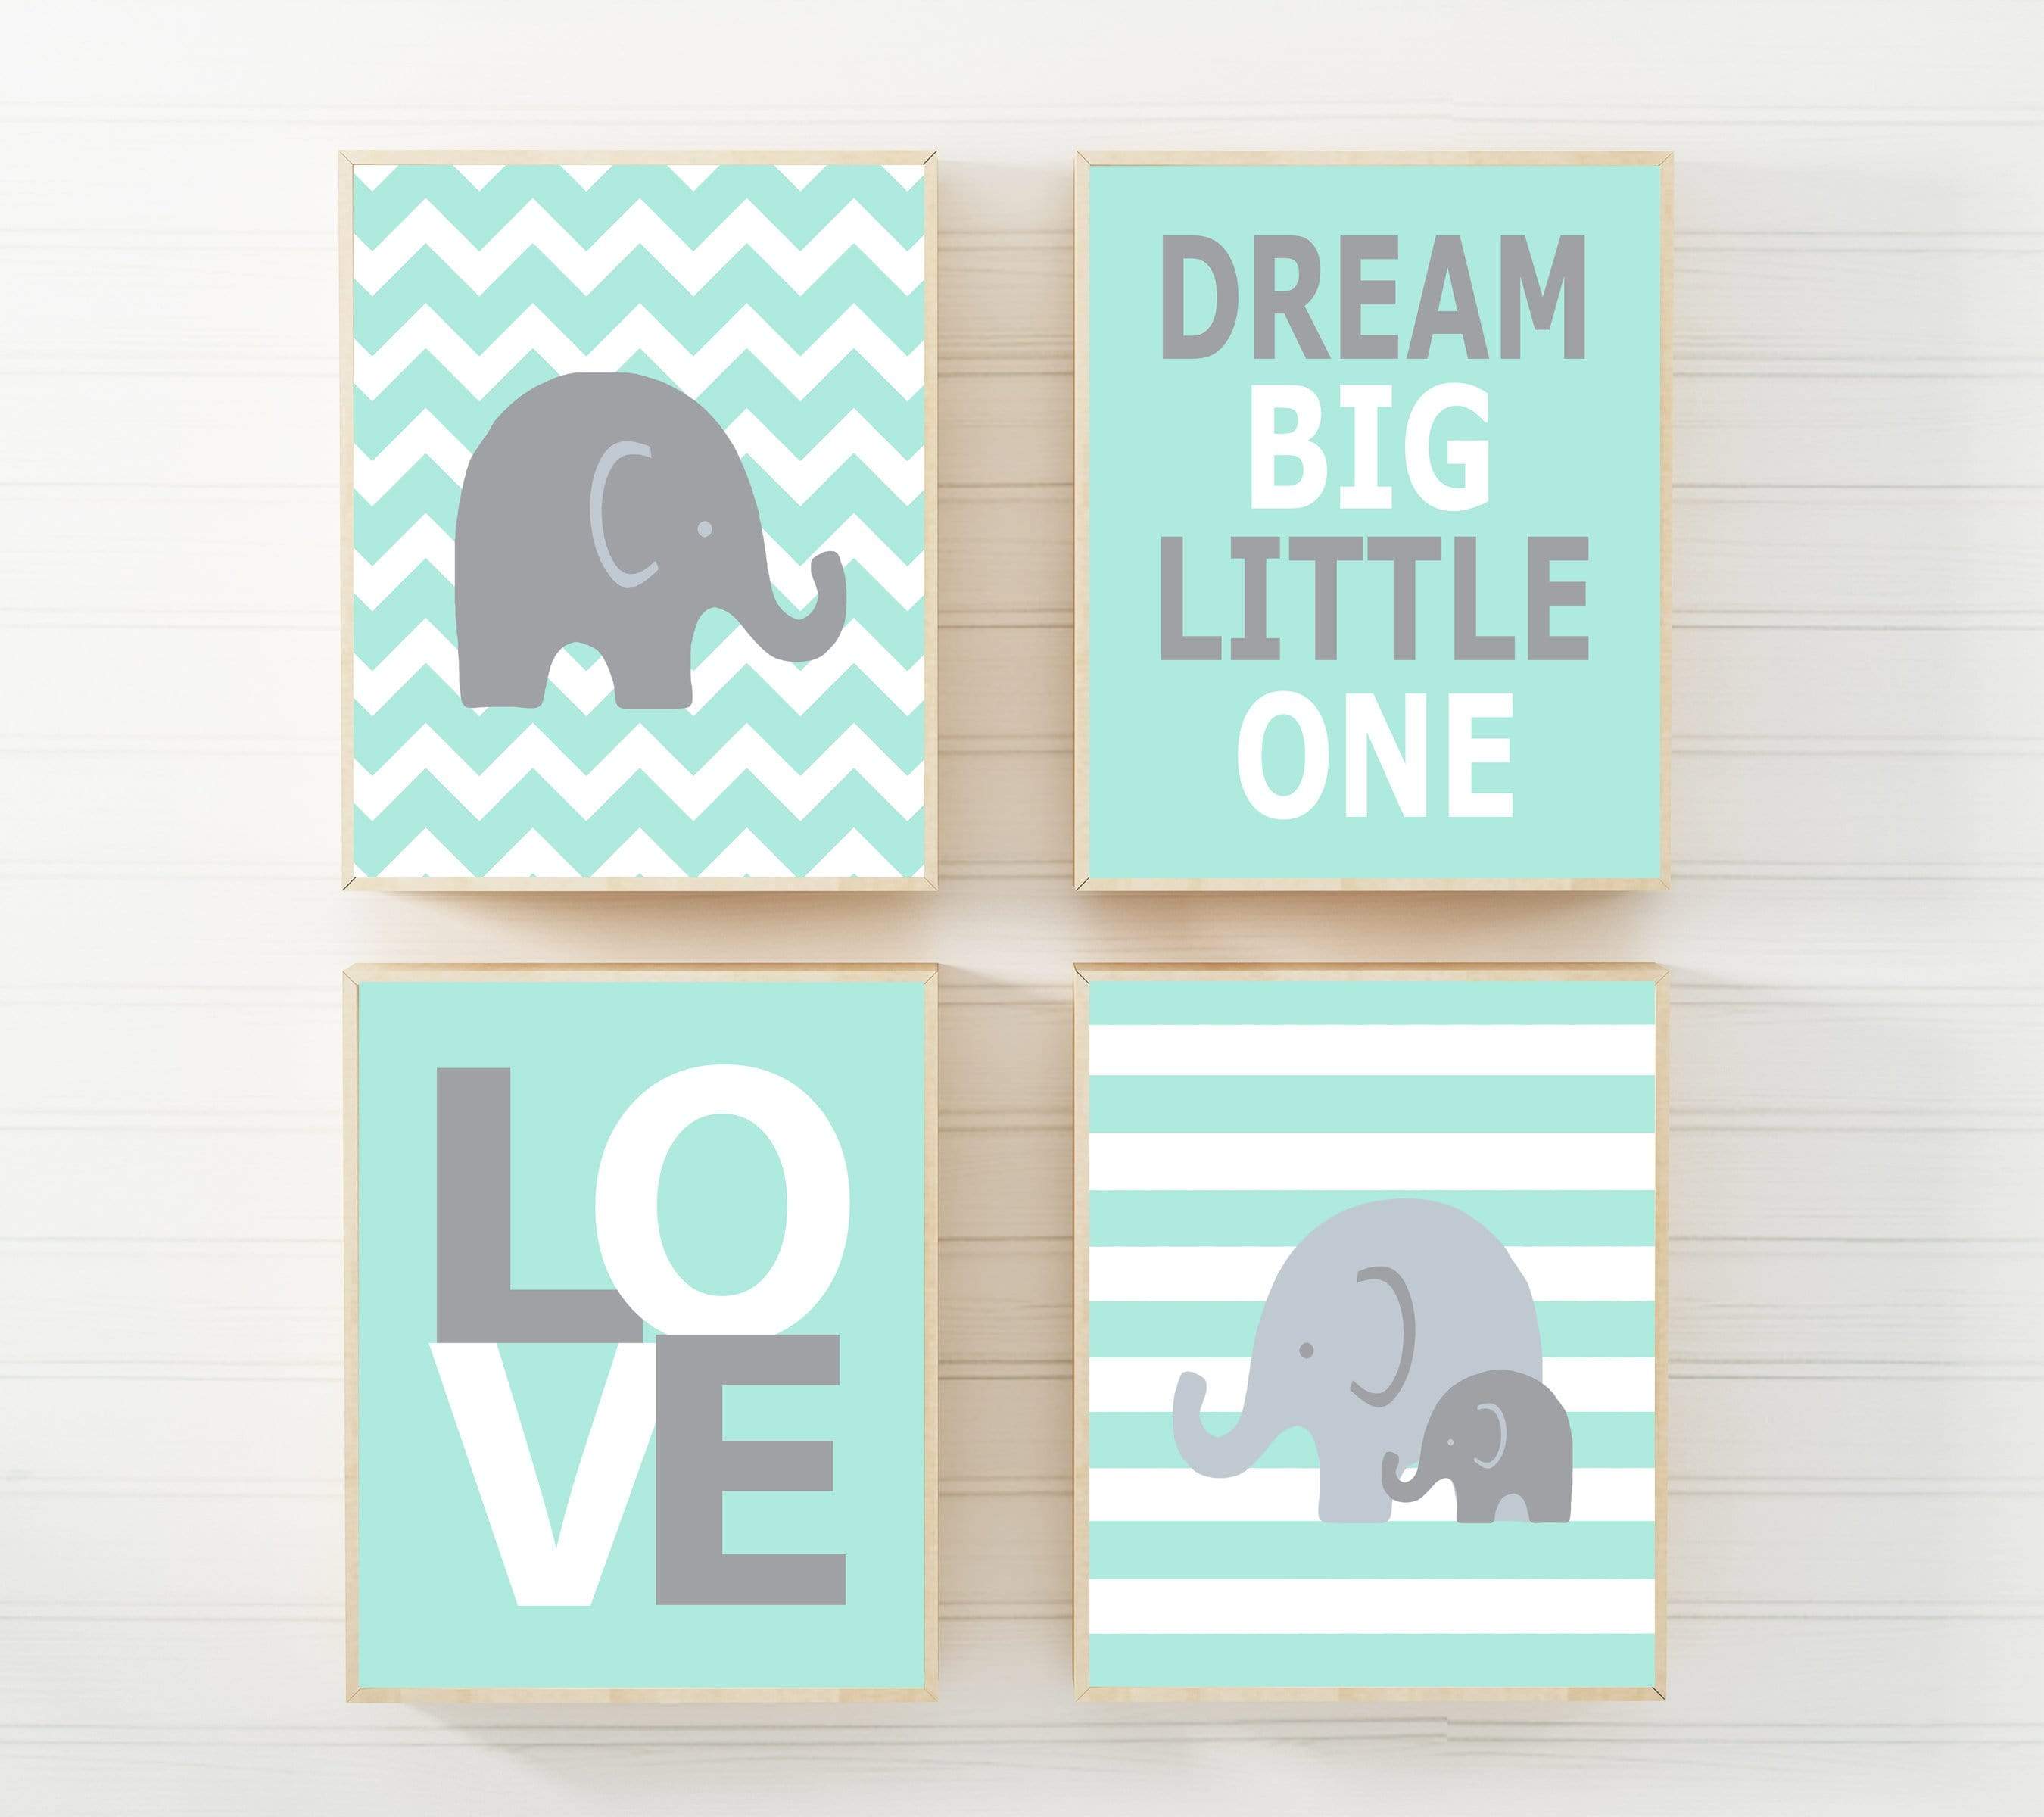 8x10 Love and Dream big little one Quote Prints with Elephants | Set of 4 nursery art print baby nursery bedroom decor